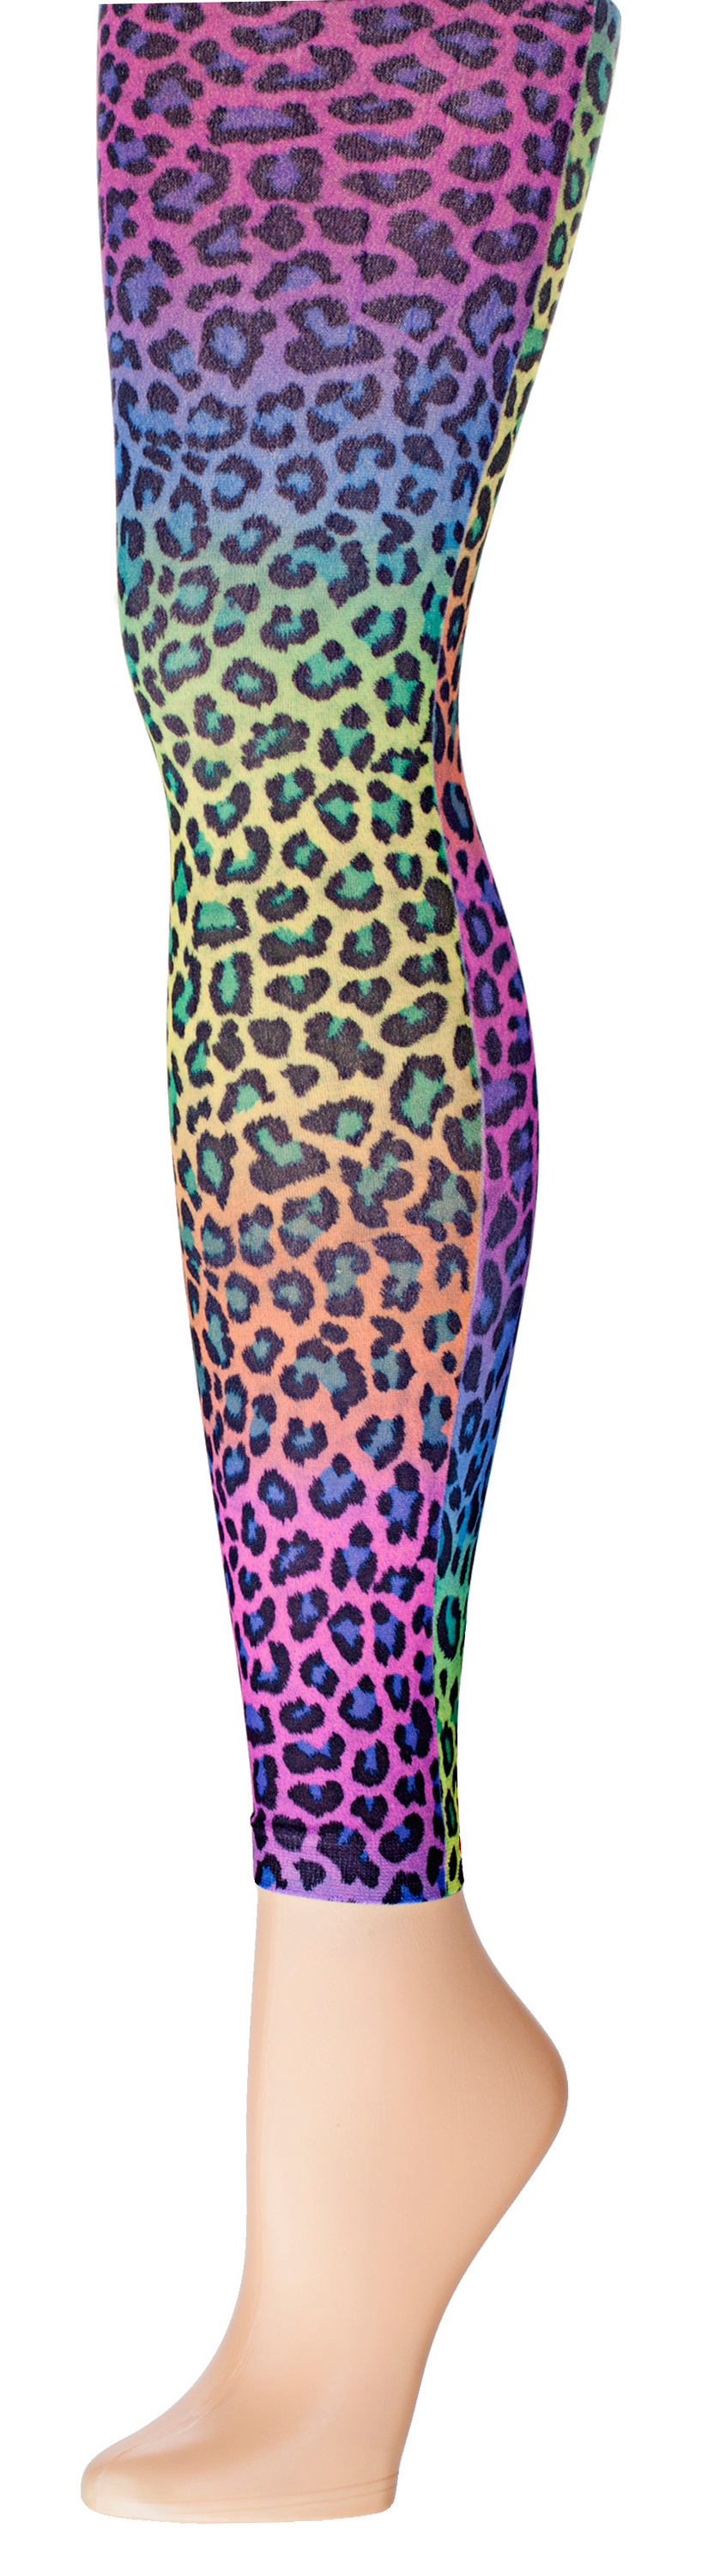 Women's Fashion LEGGINGS - Leopard Print